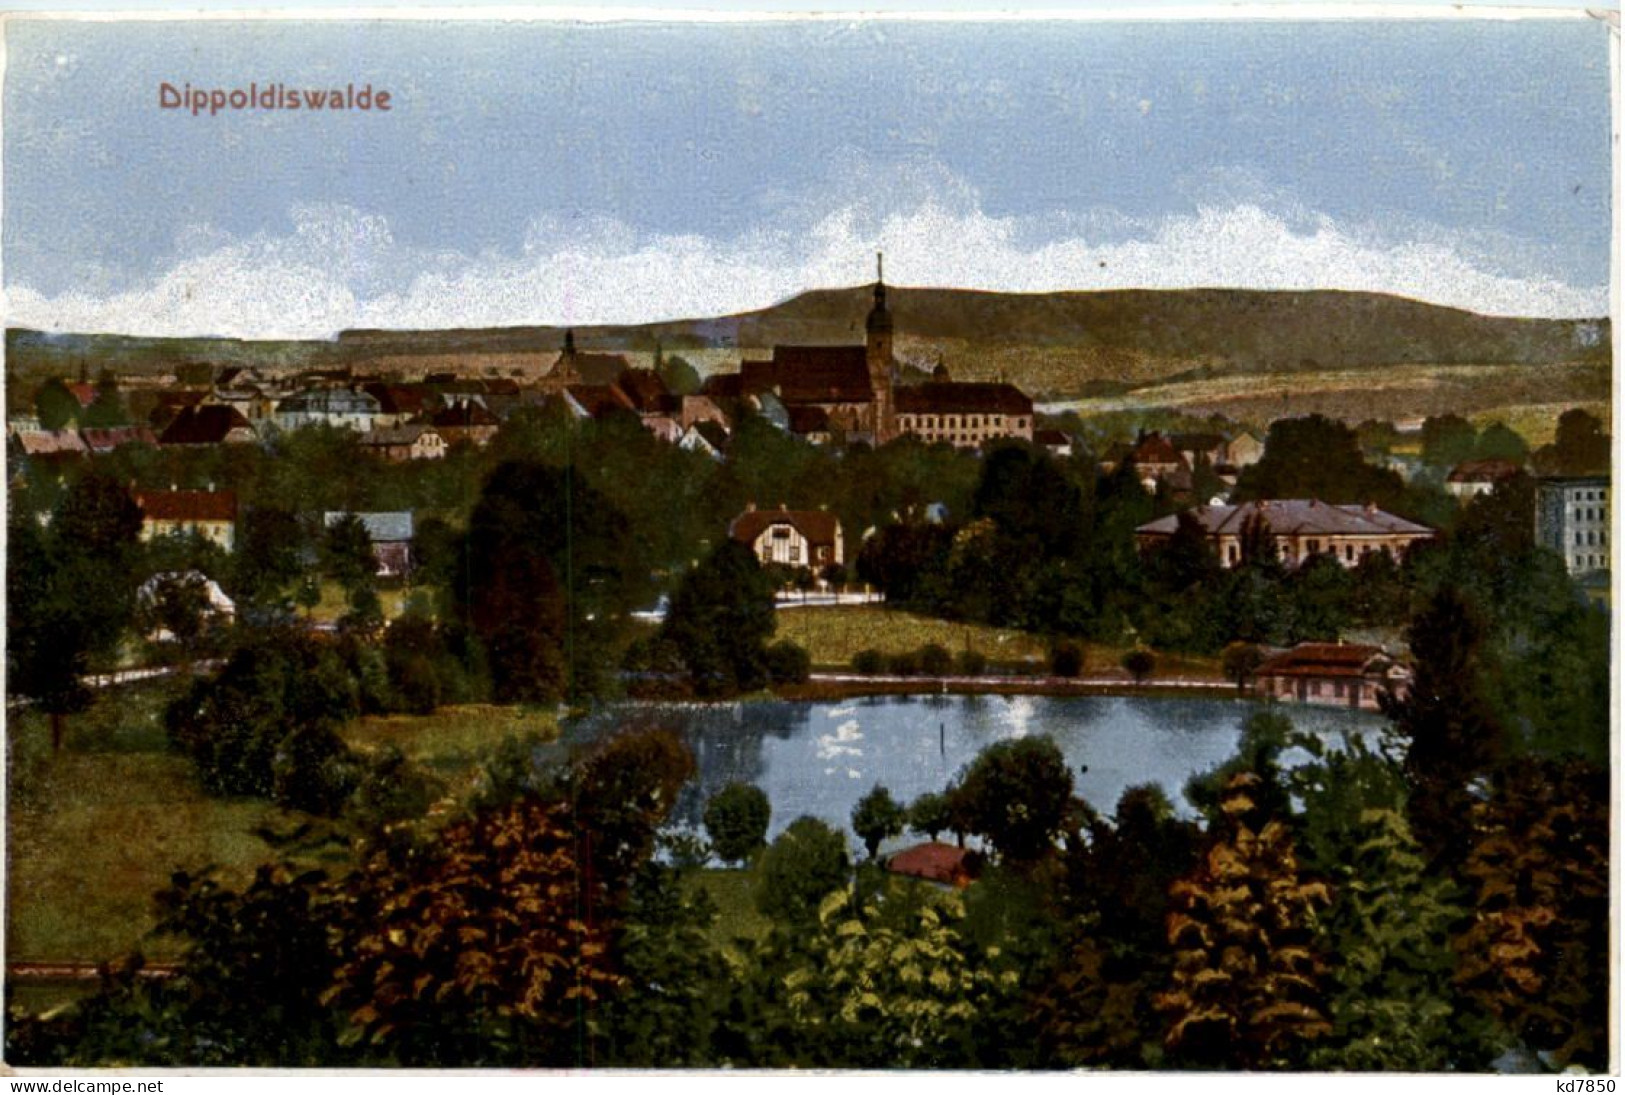 Dippoldiswalde - Dippoldiswalde